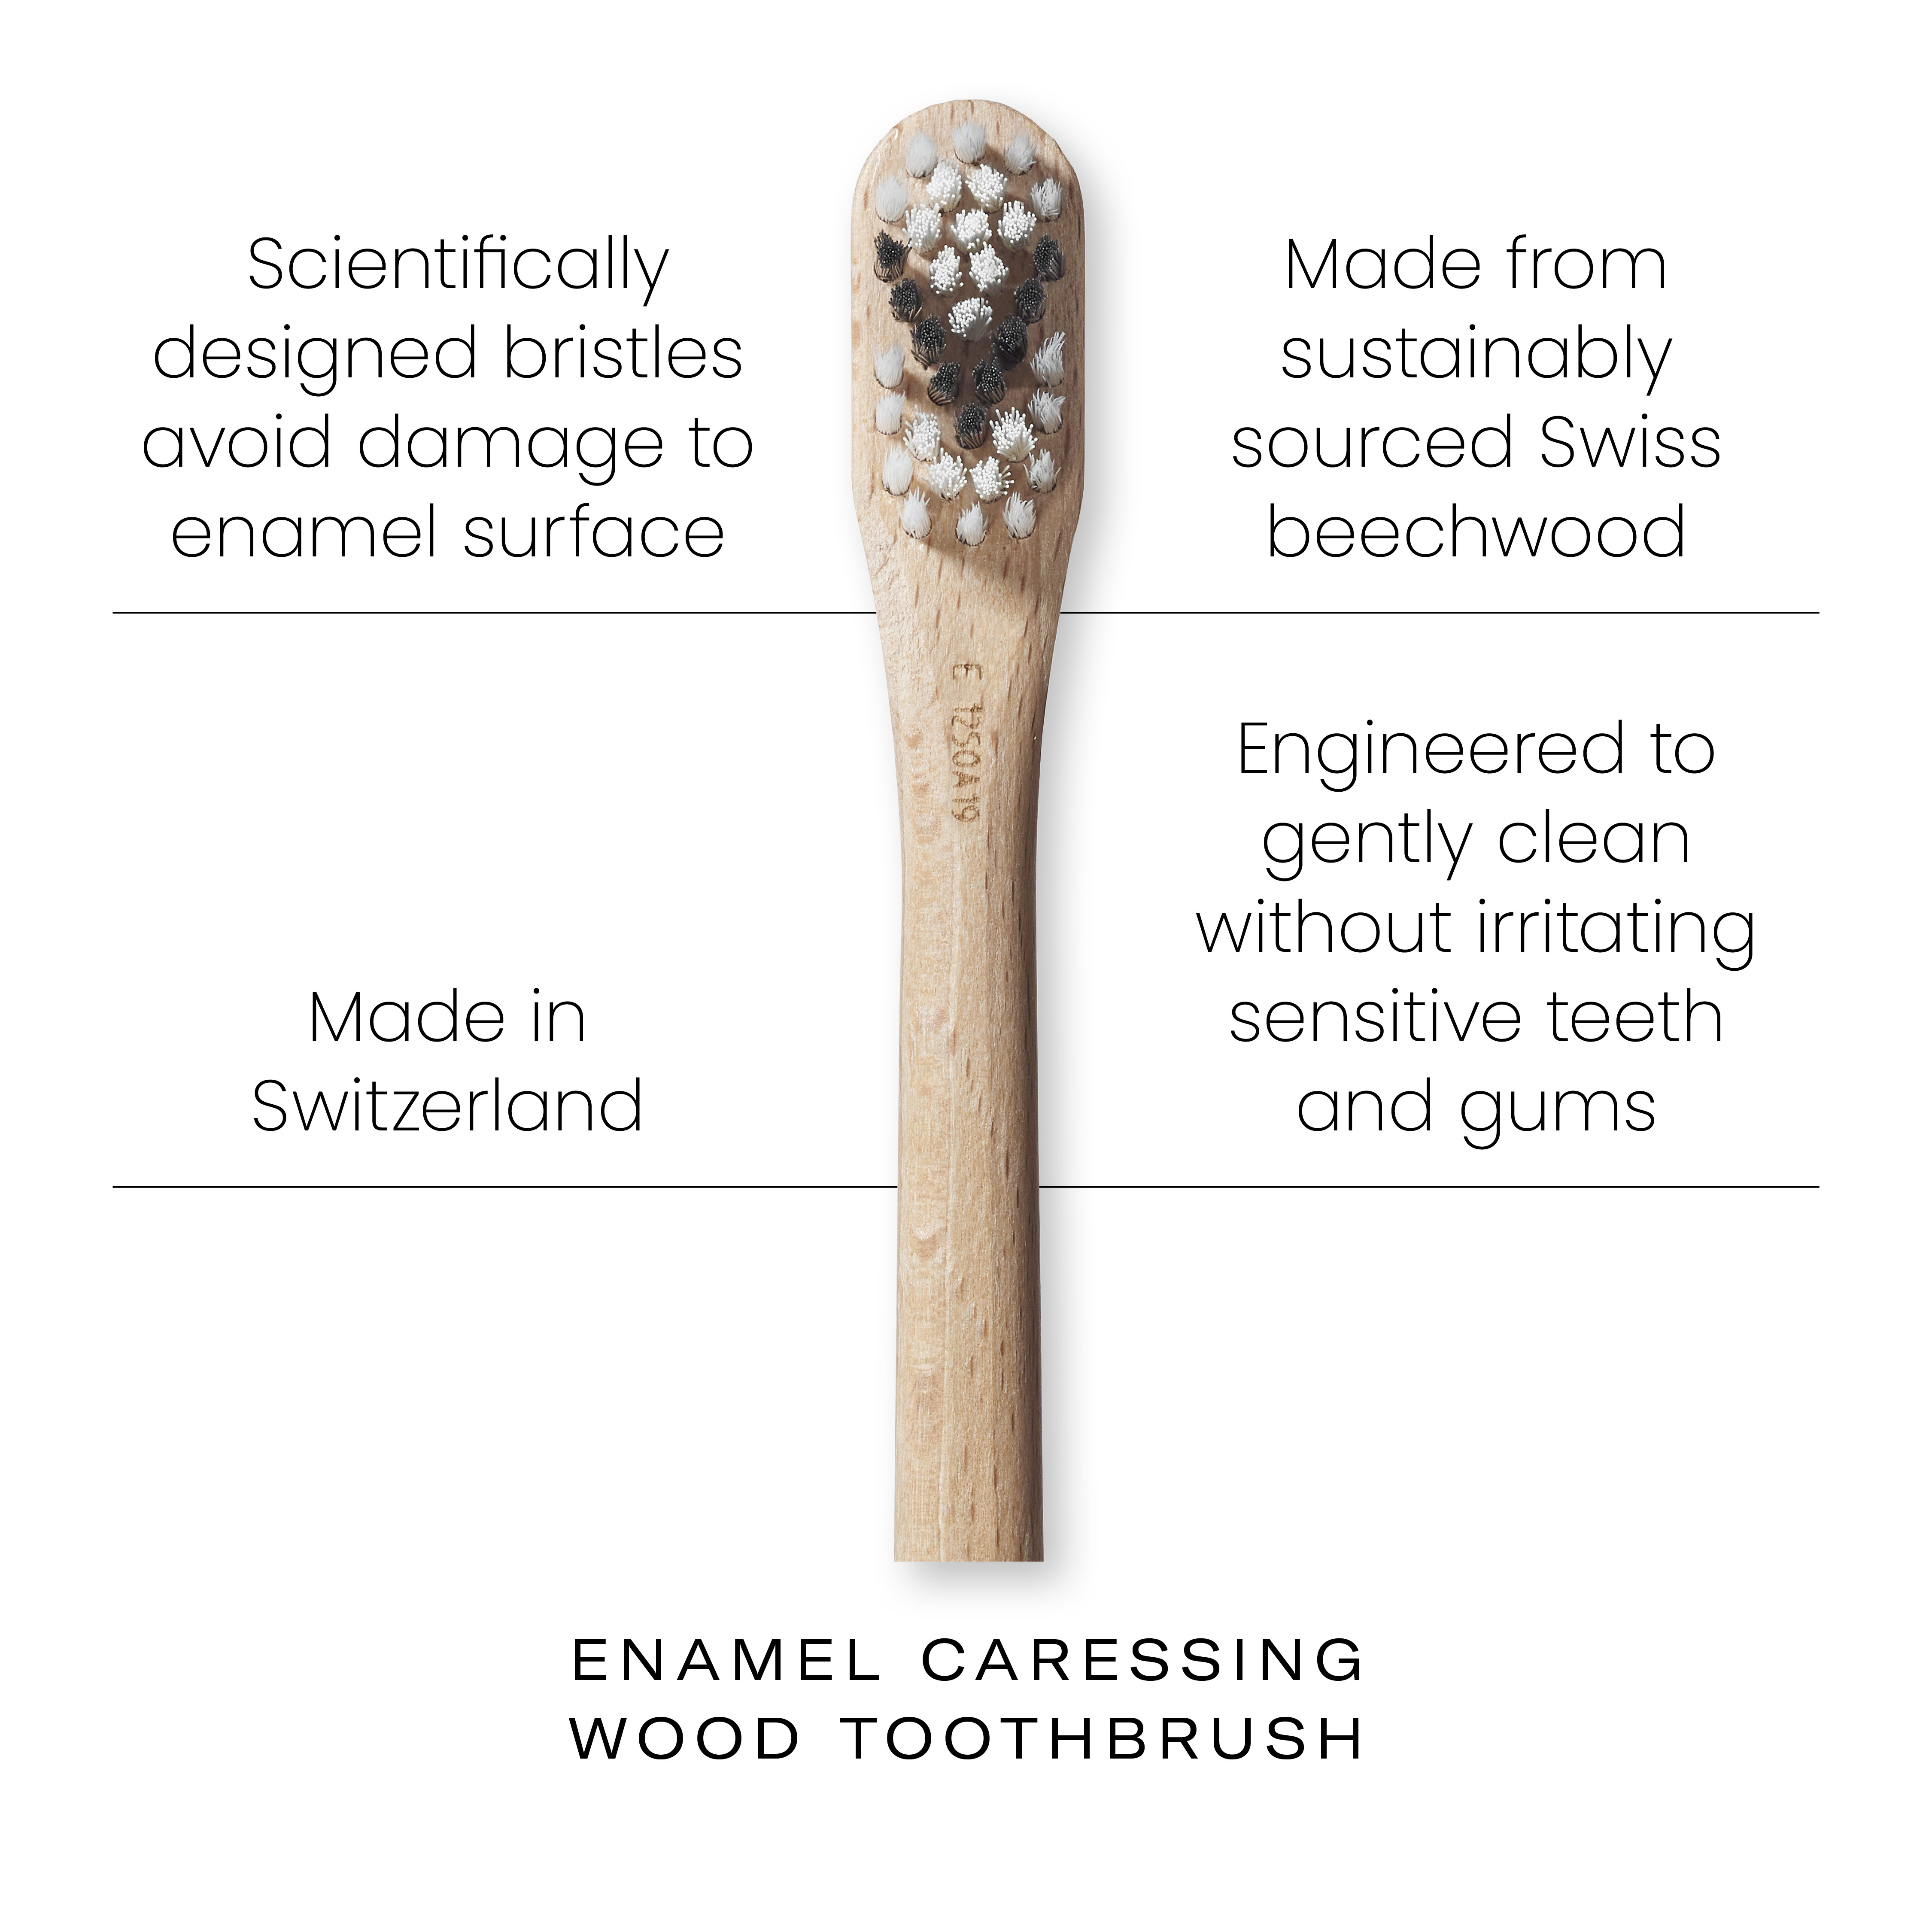 Numéro d’image 2 brosse à dents Enamel Caressing Wood Toothbrush